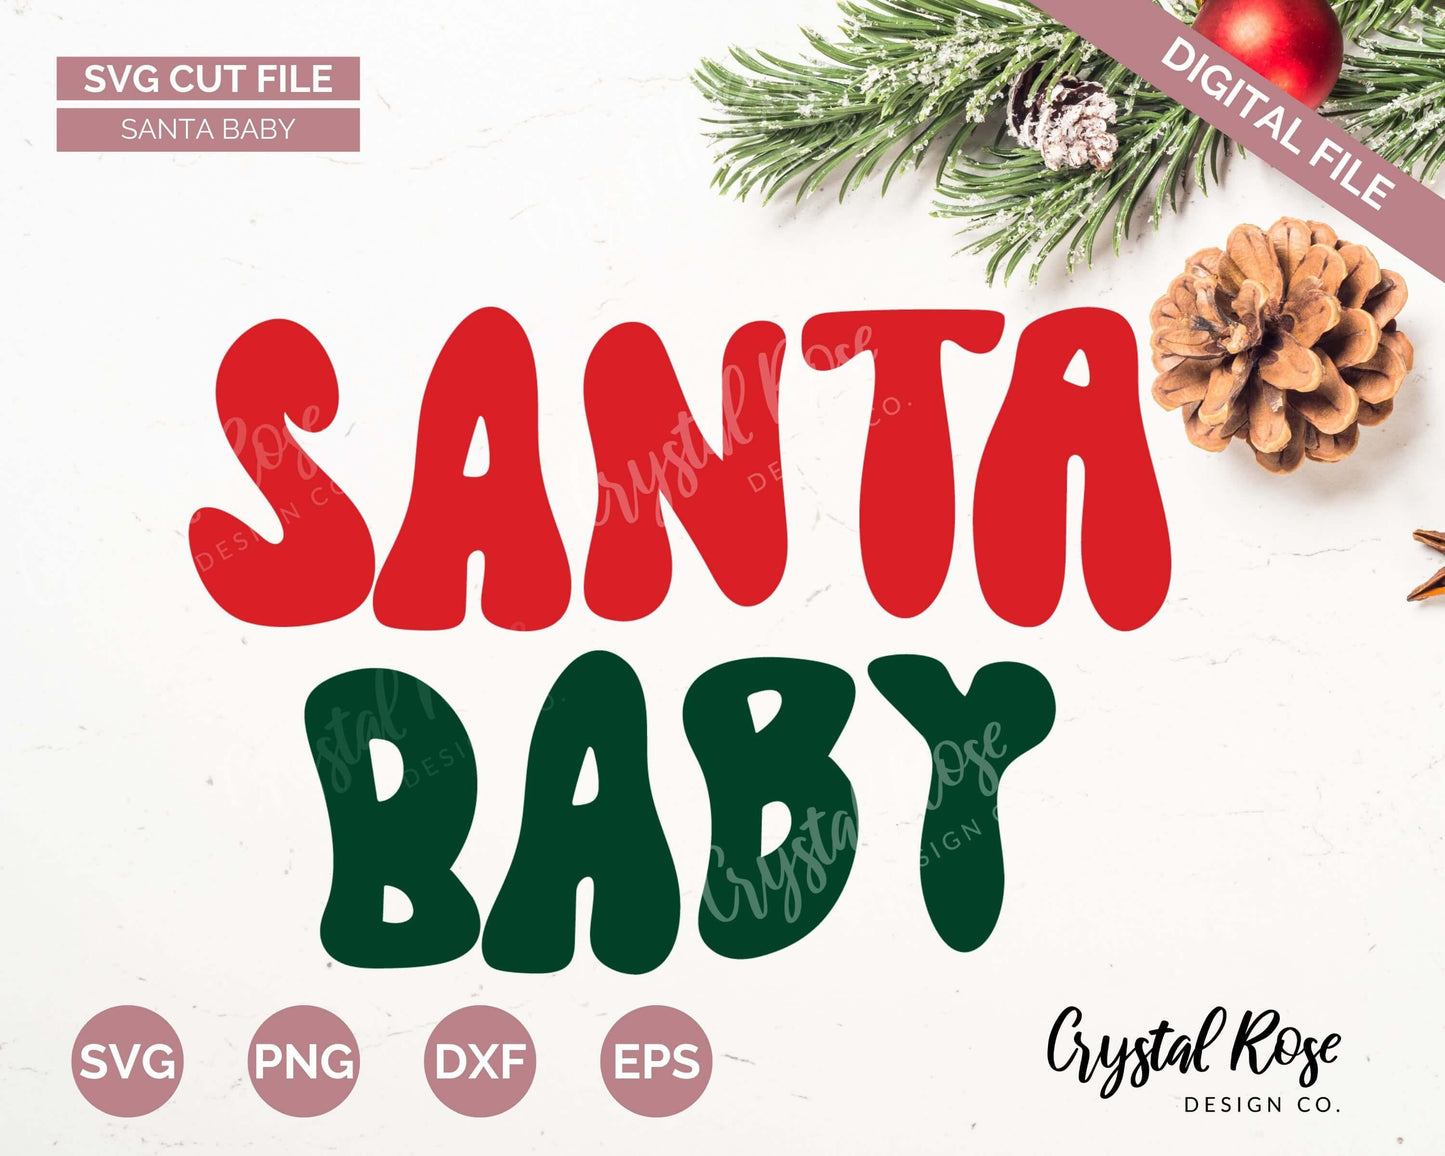 Retro Santa Baby SVG, Christmas SVG, Digital Download, Cricut, Silhouette, Glowforge (includes svg/png/dxf/eps)